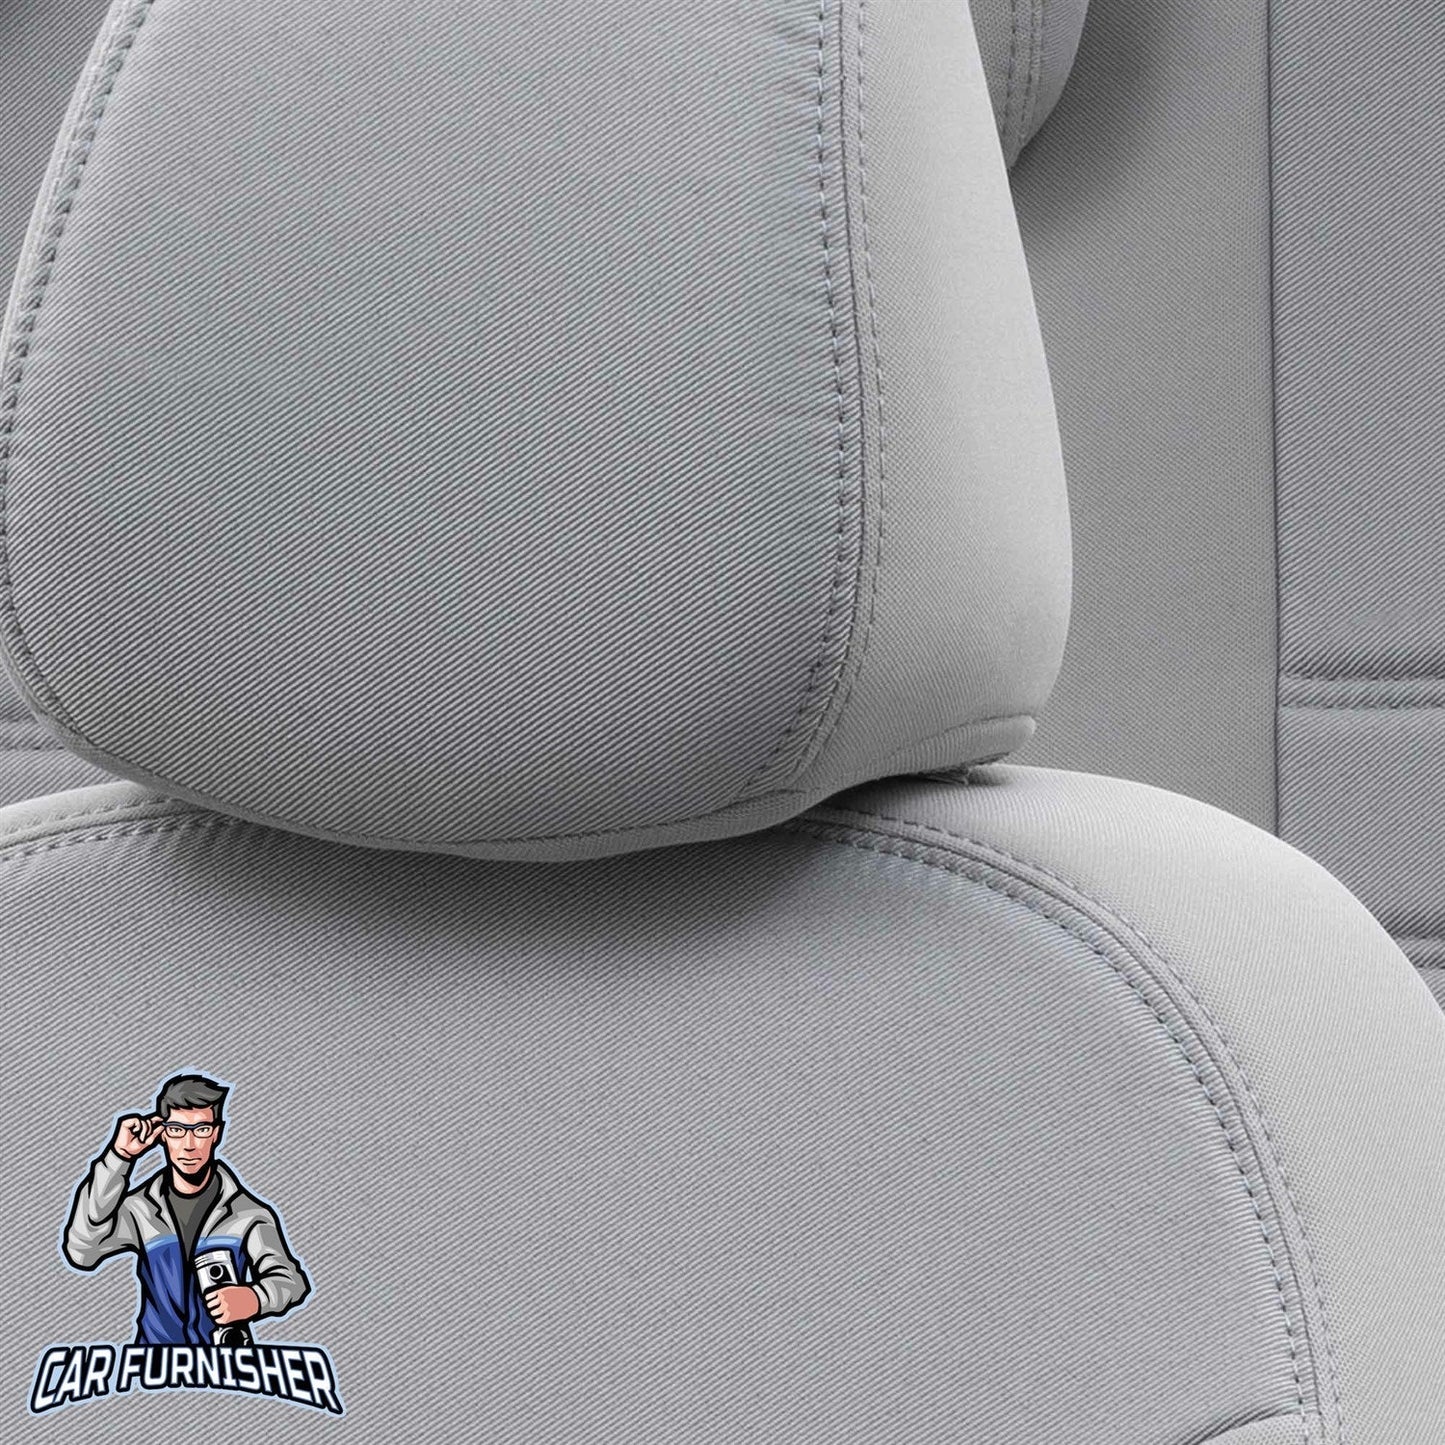 Skoda Yeti Seat Covers Original Jacquard Design Light Gray Jacquard Fabric